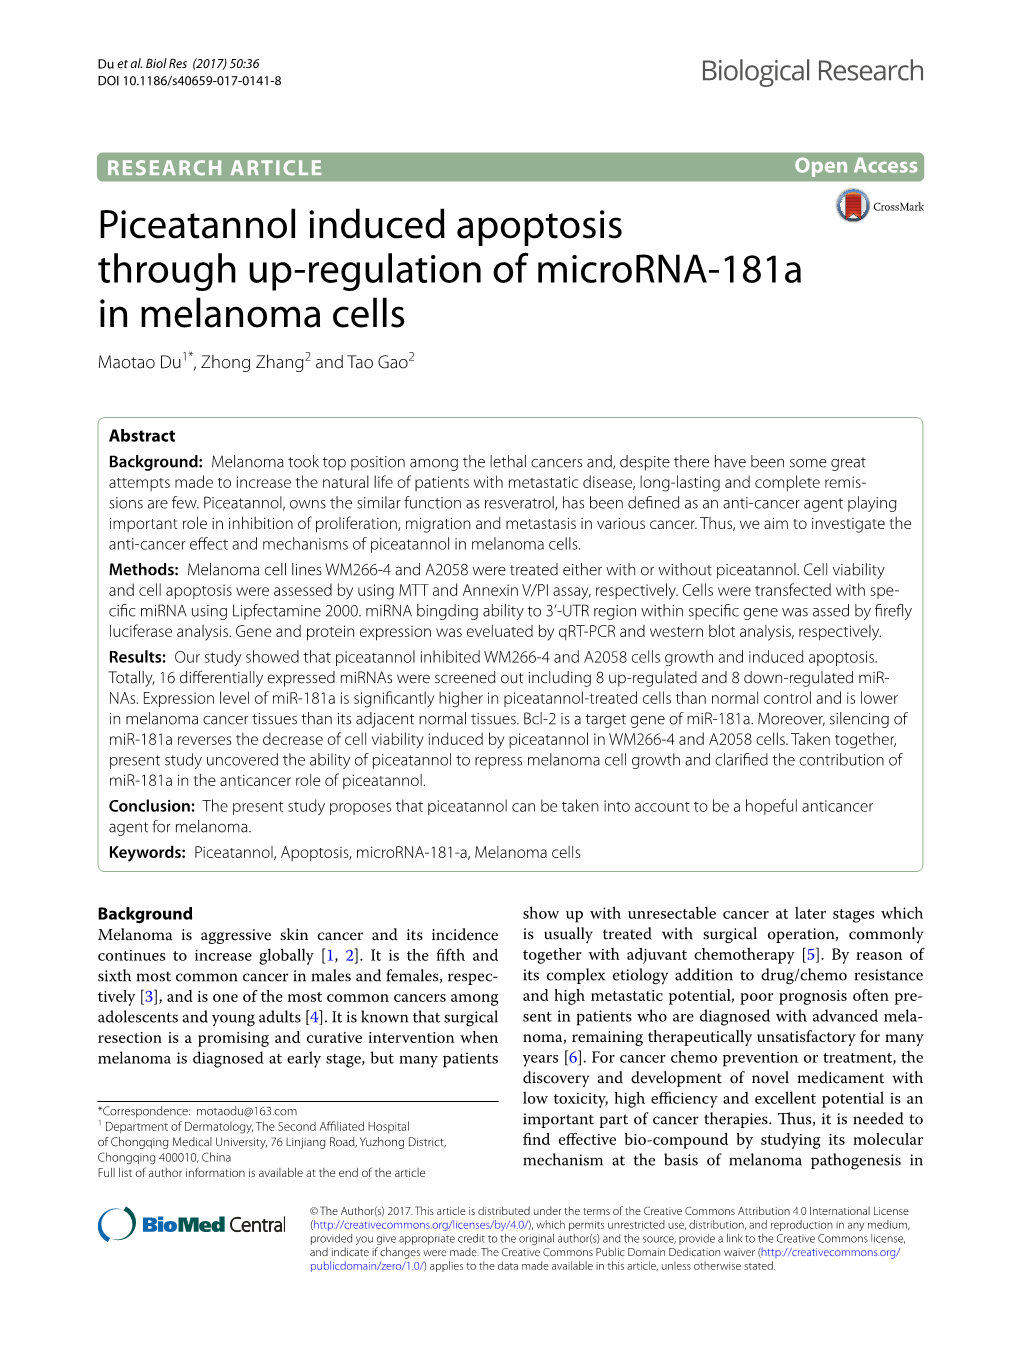 Piceatannol Induced Apoptosis Through Up-Regulation of Microrna